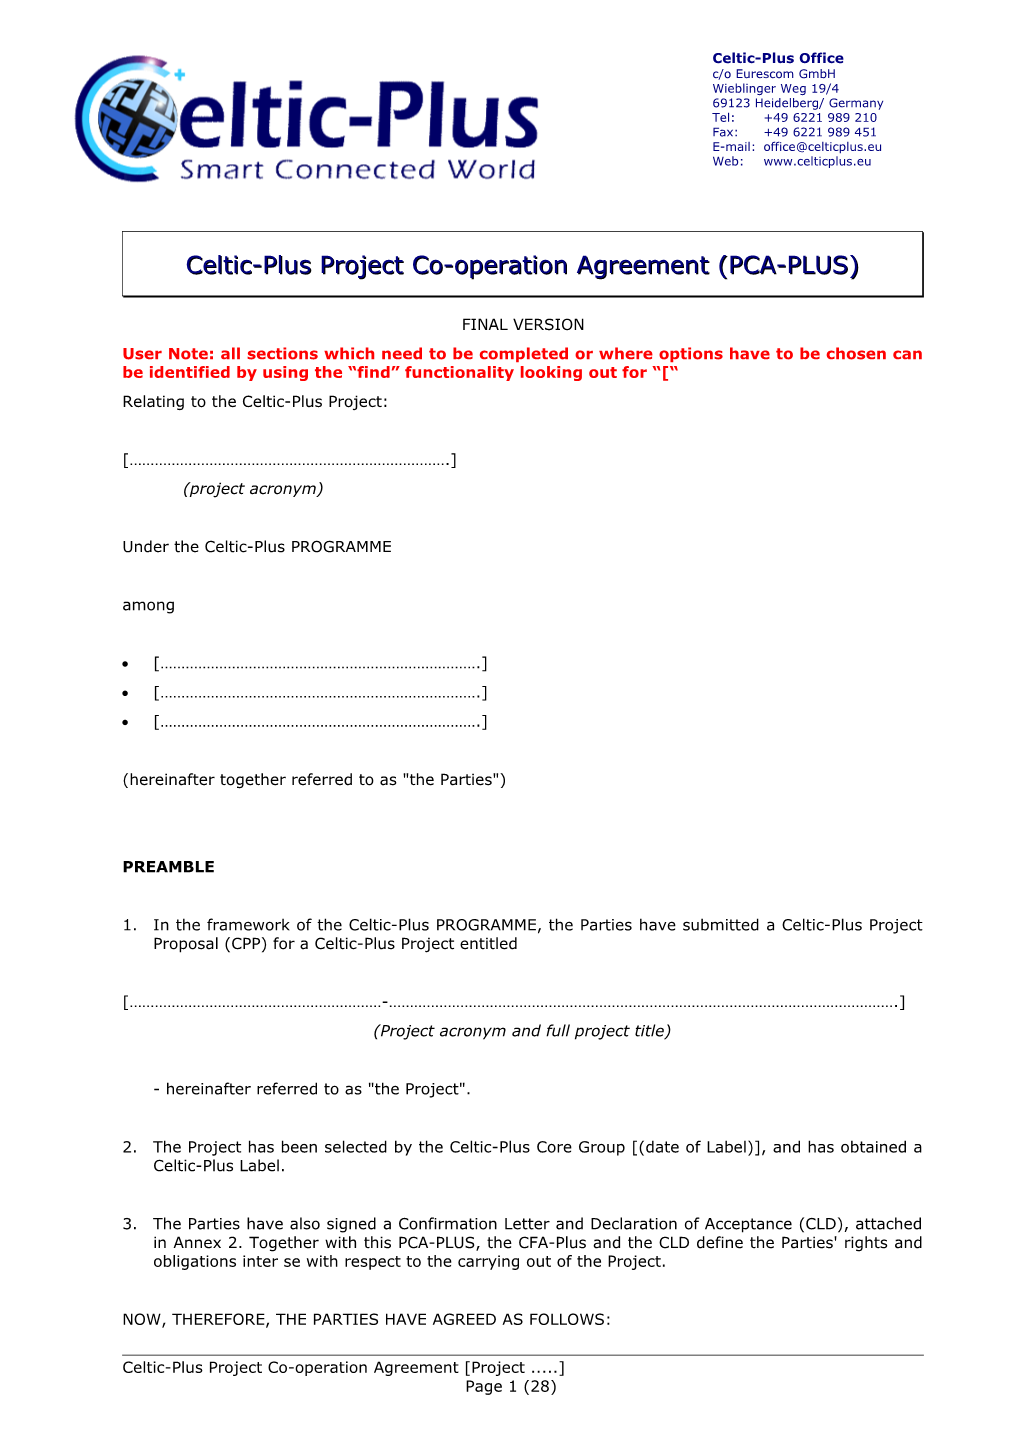 Celtic-Plus Project Co-Operation Agreement (PCA-PLUS)